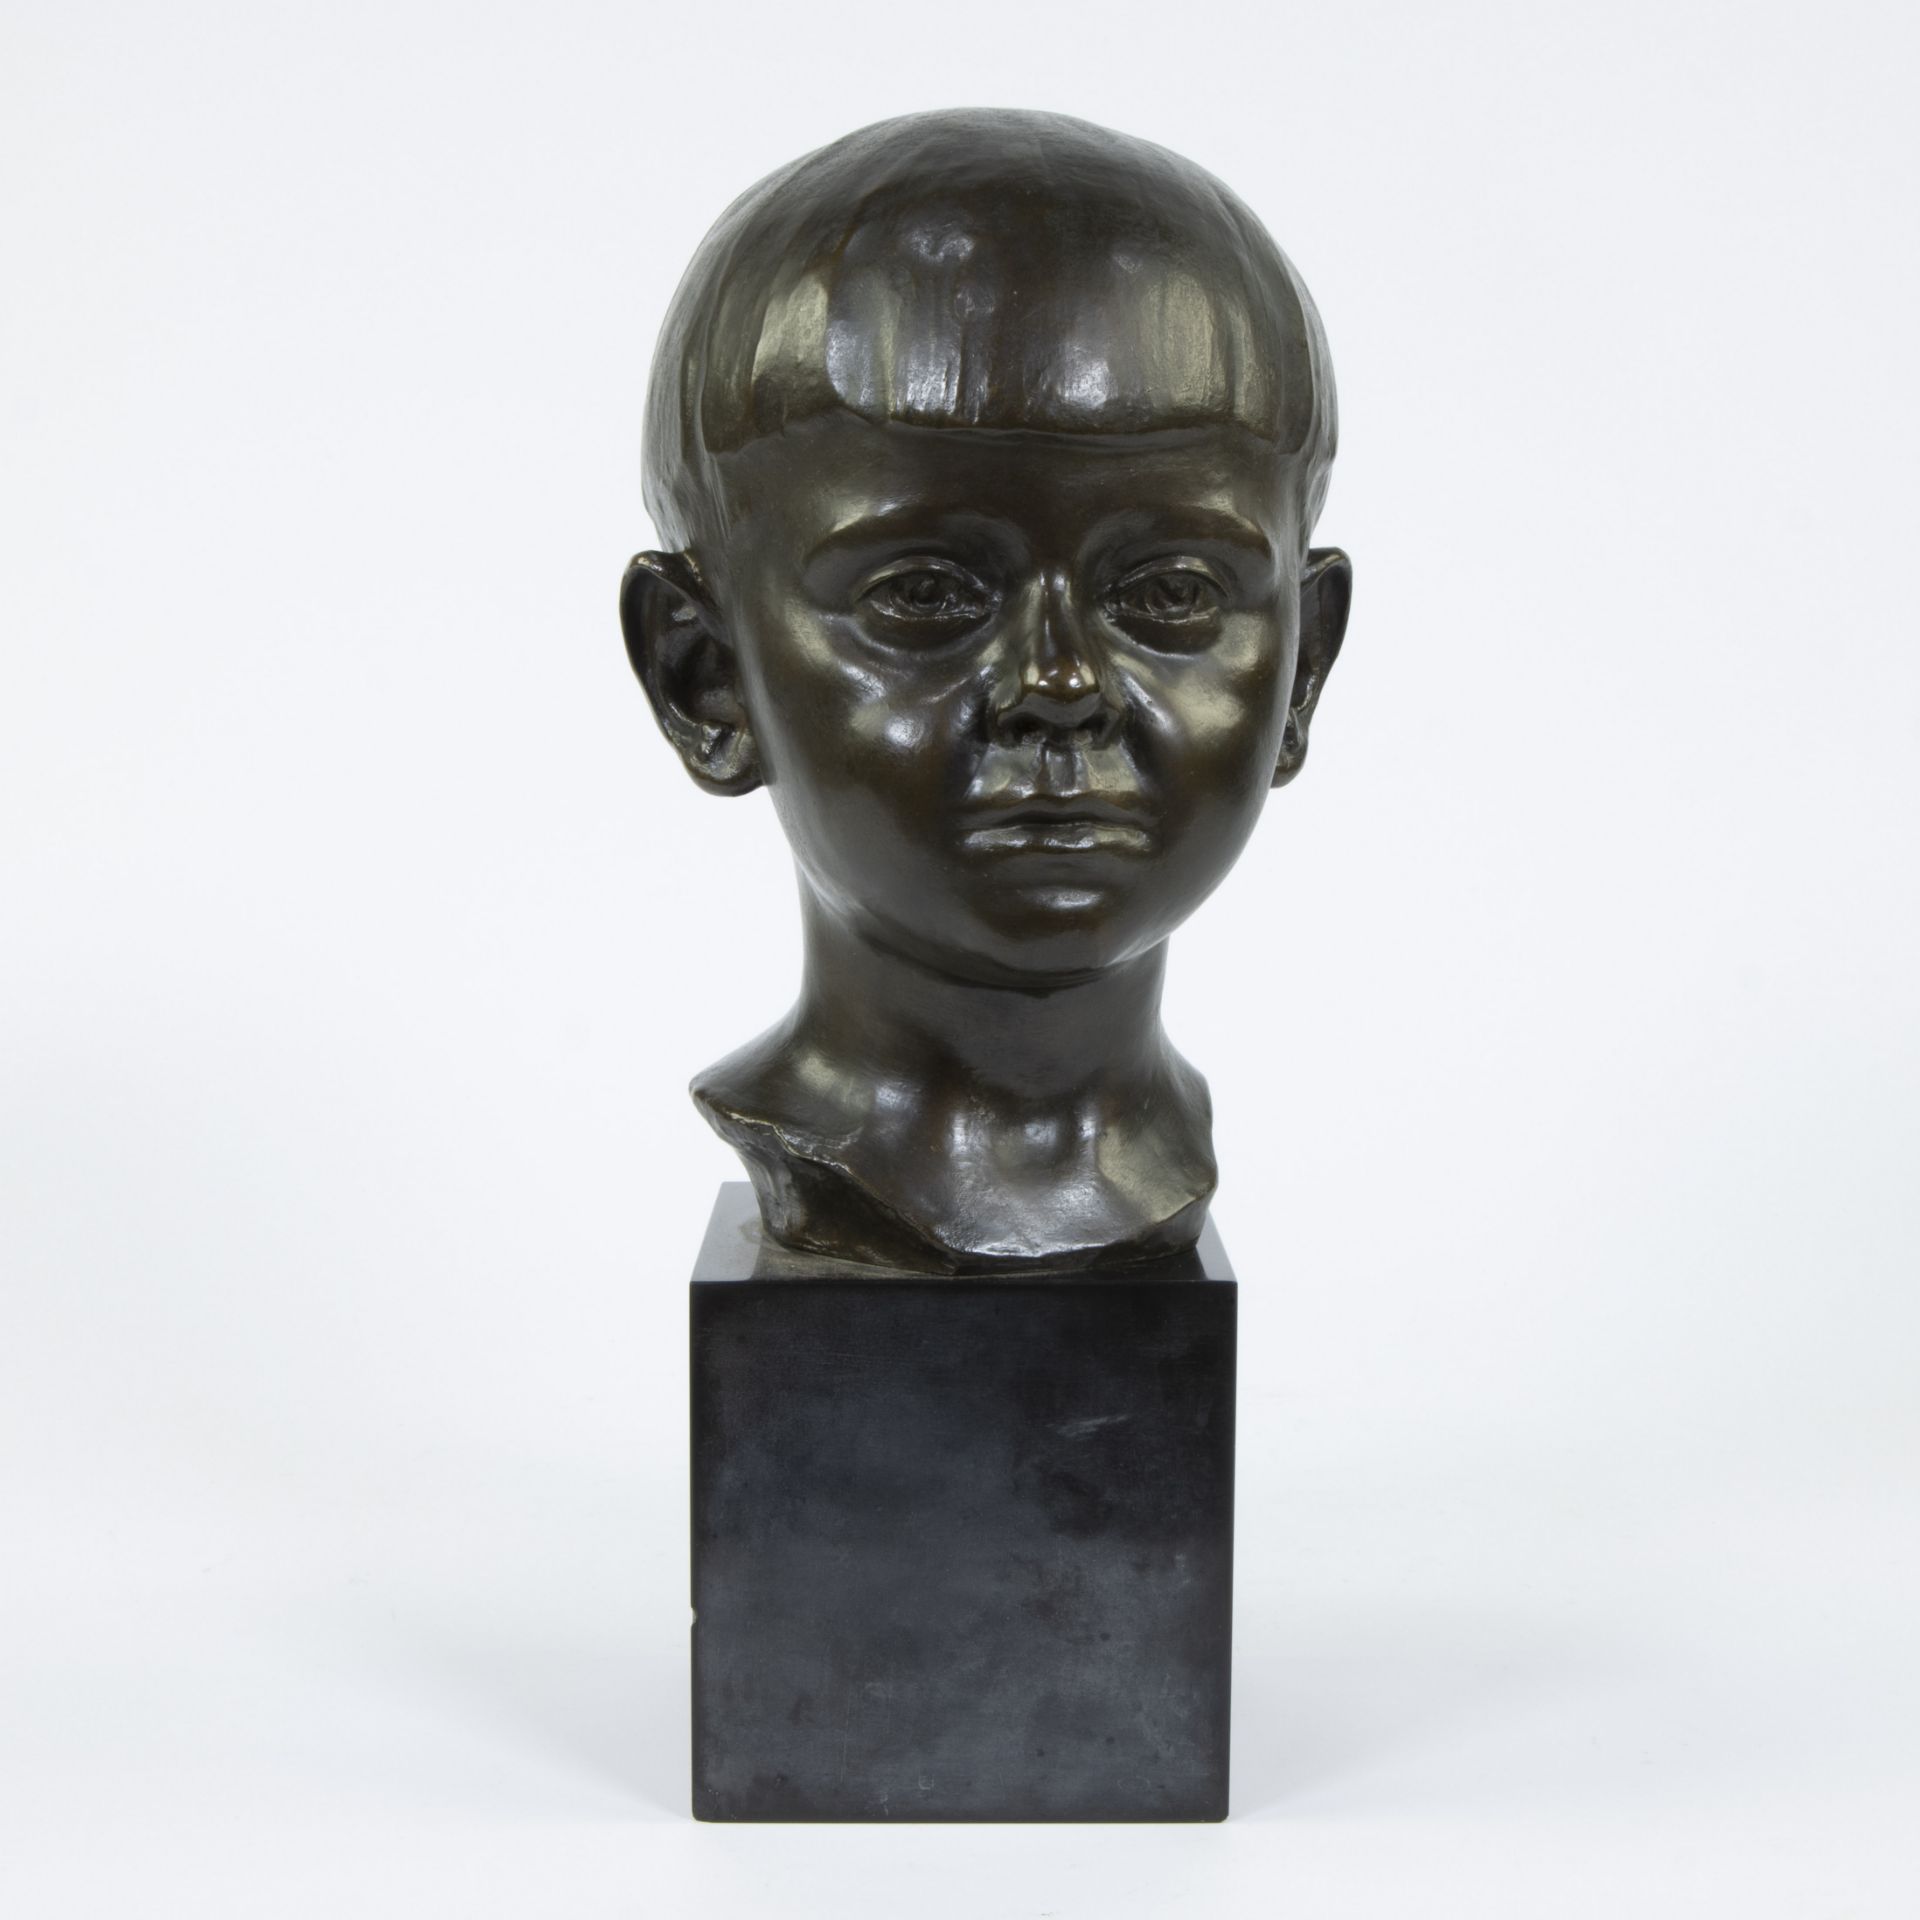 Henri THIERY (1875-1941), bronze head of a boy, signed